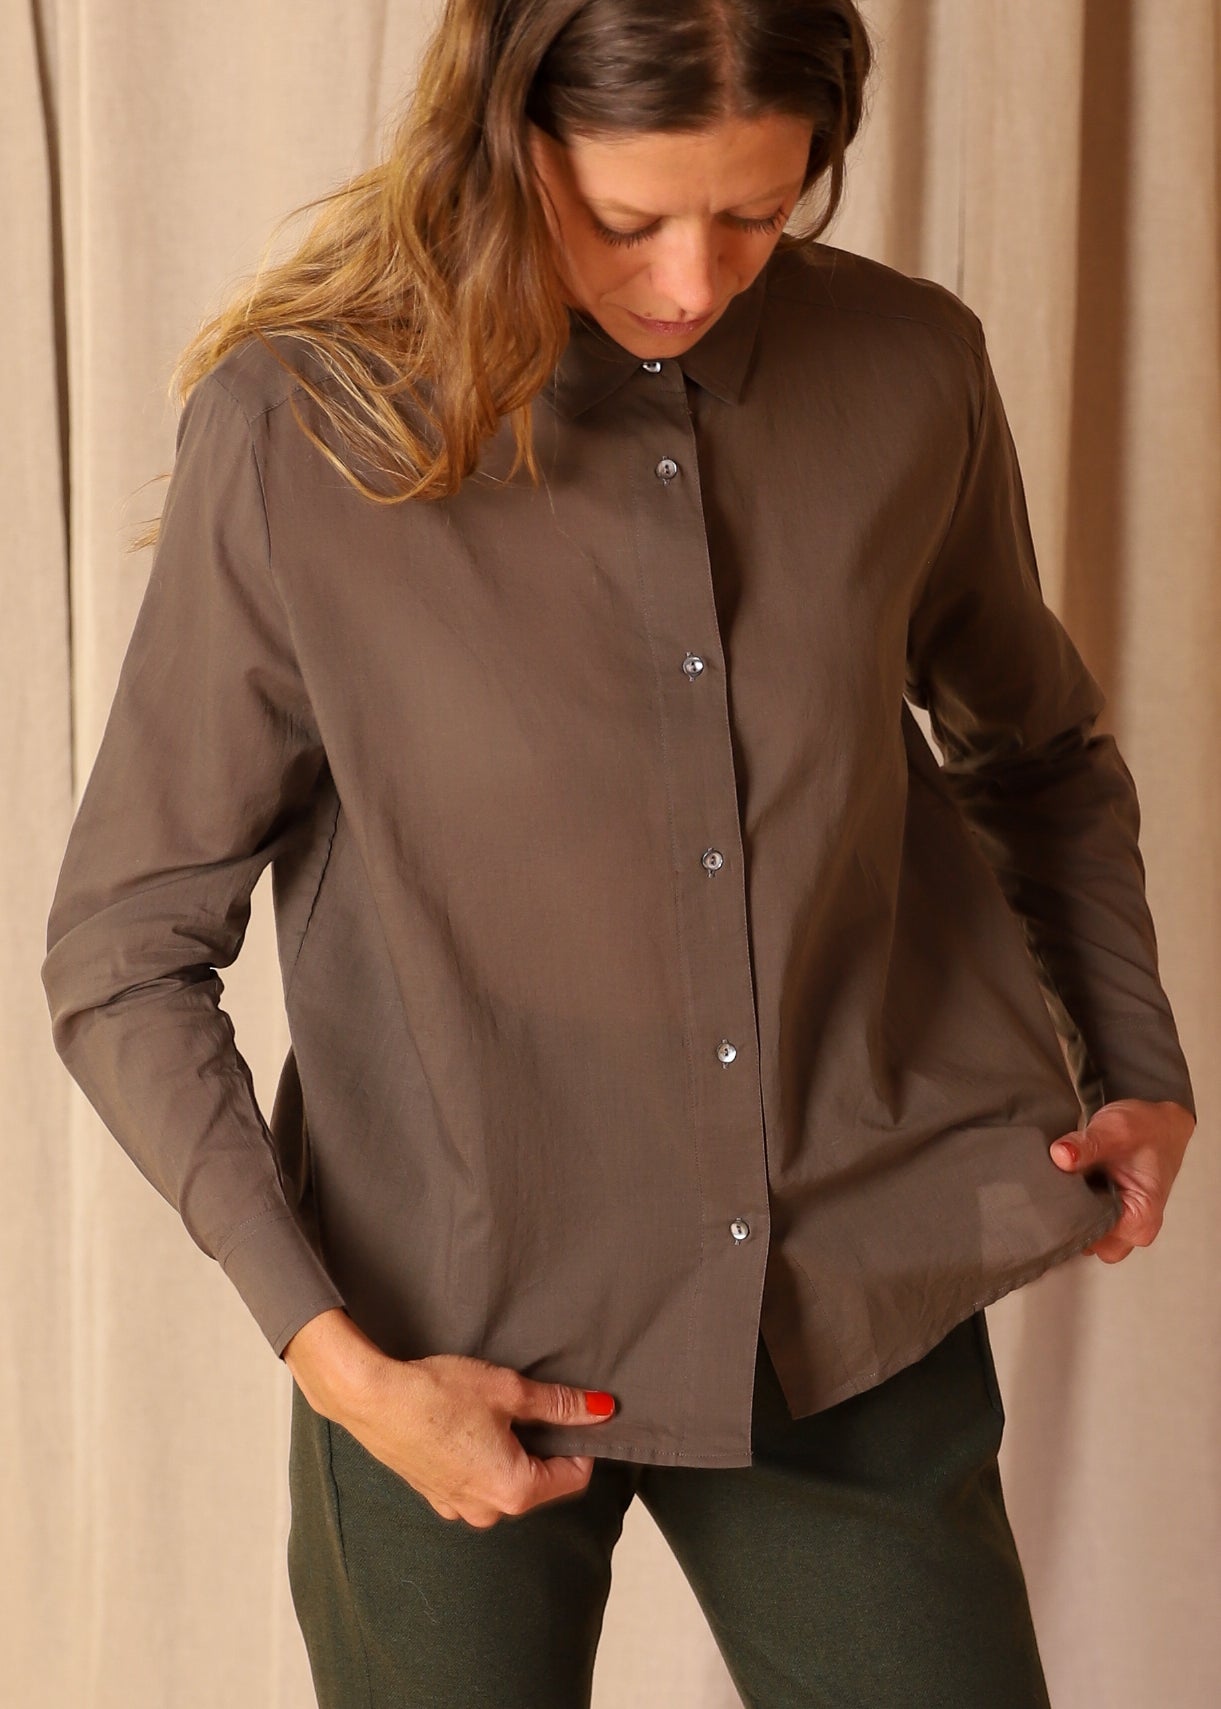 Diega Paris French Cotton Button-down Shirt Top Blouse